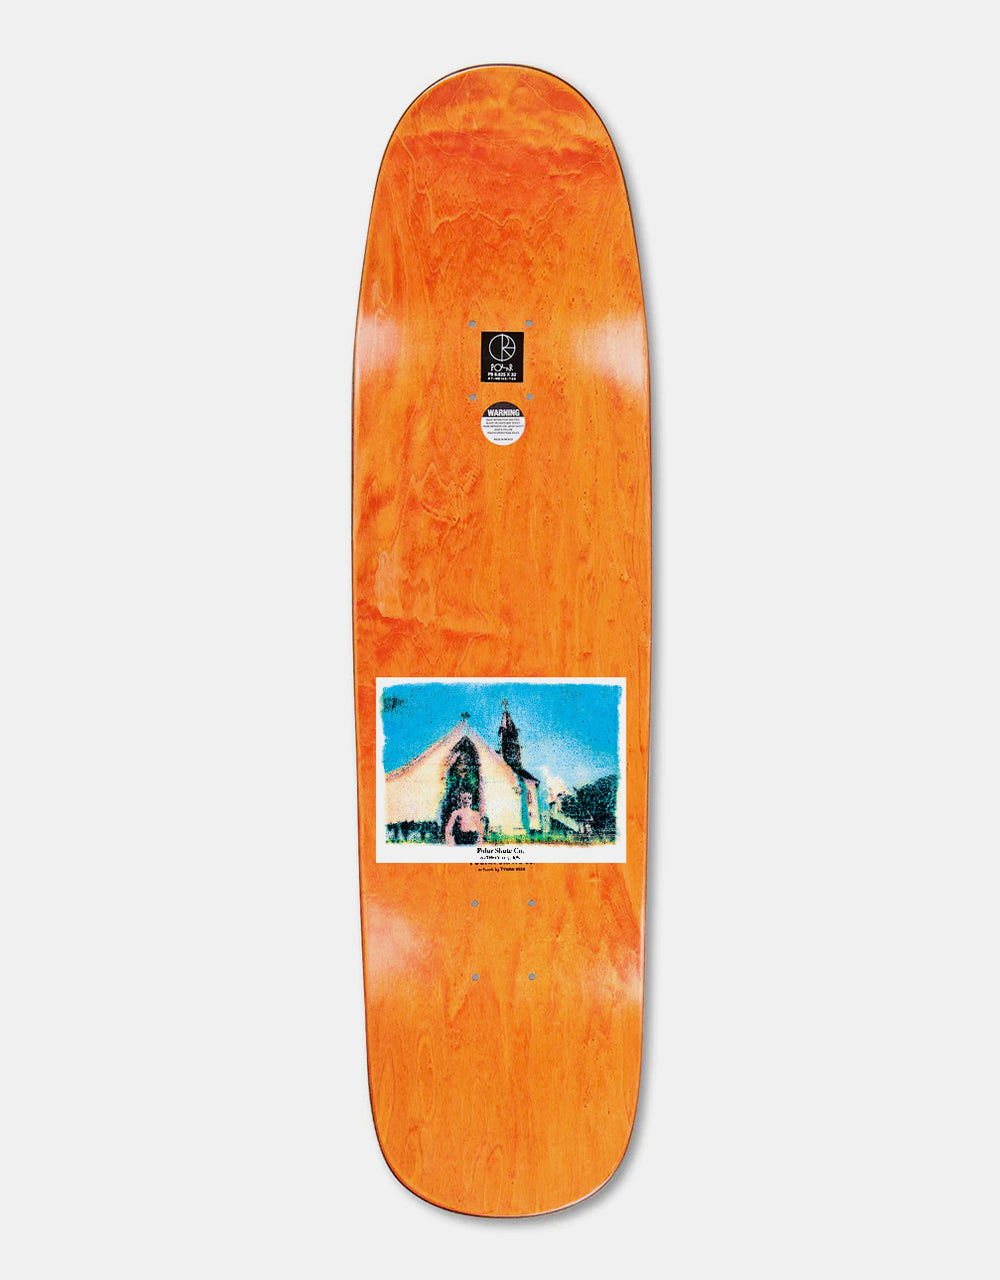 Polar Grund Devil Skateboard Deck - P9 Shape 8.625"